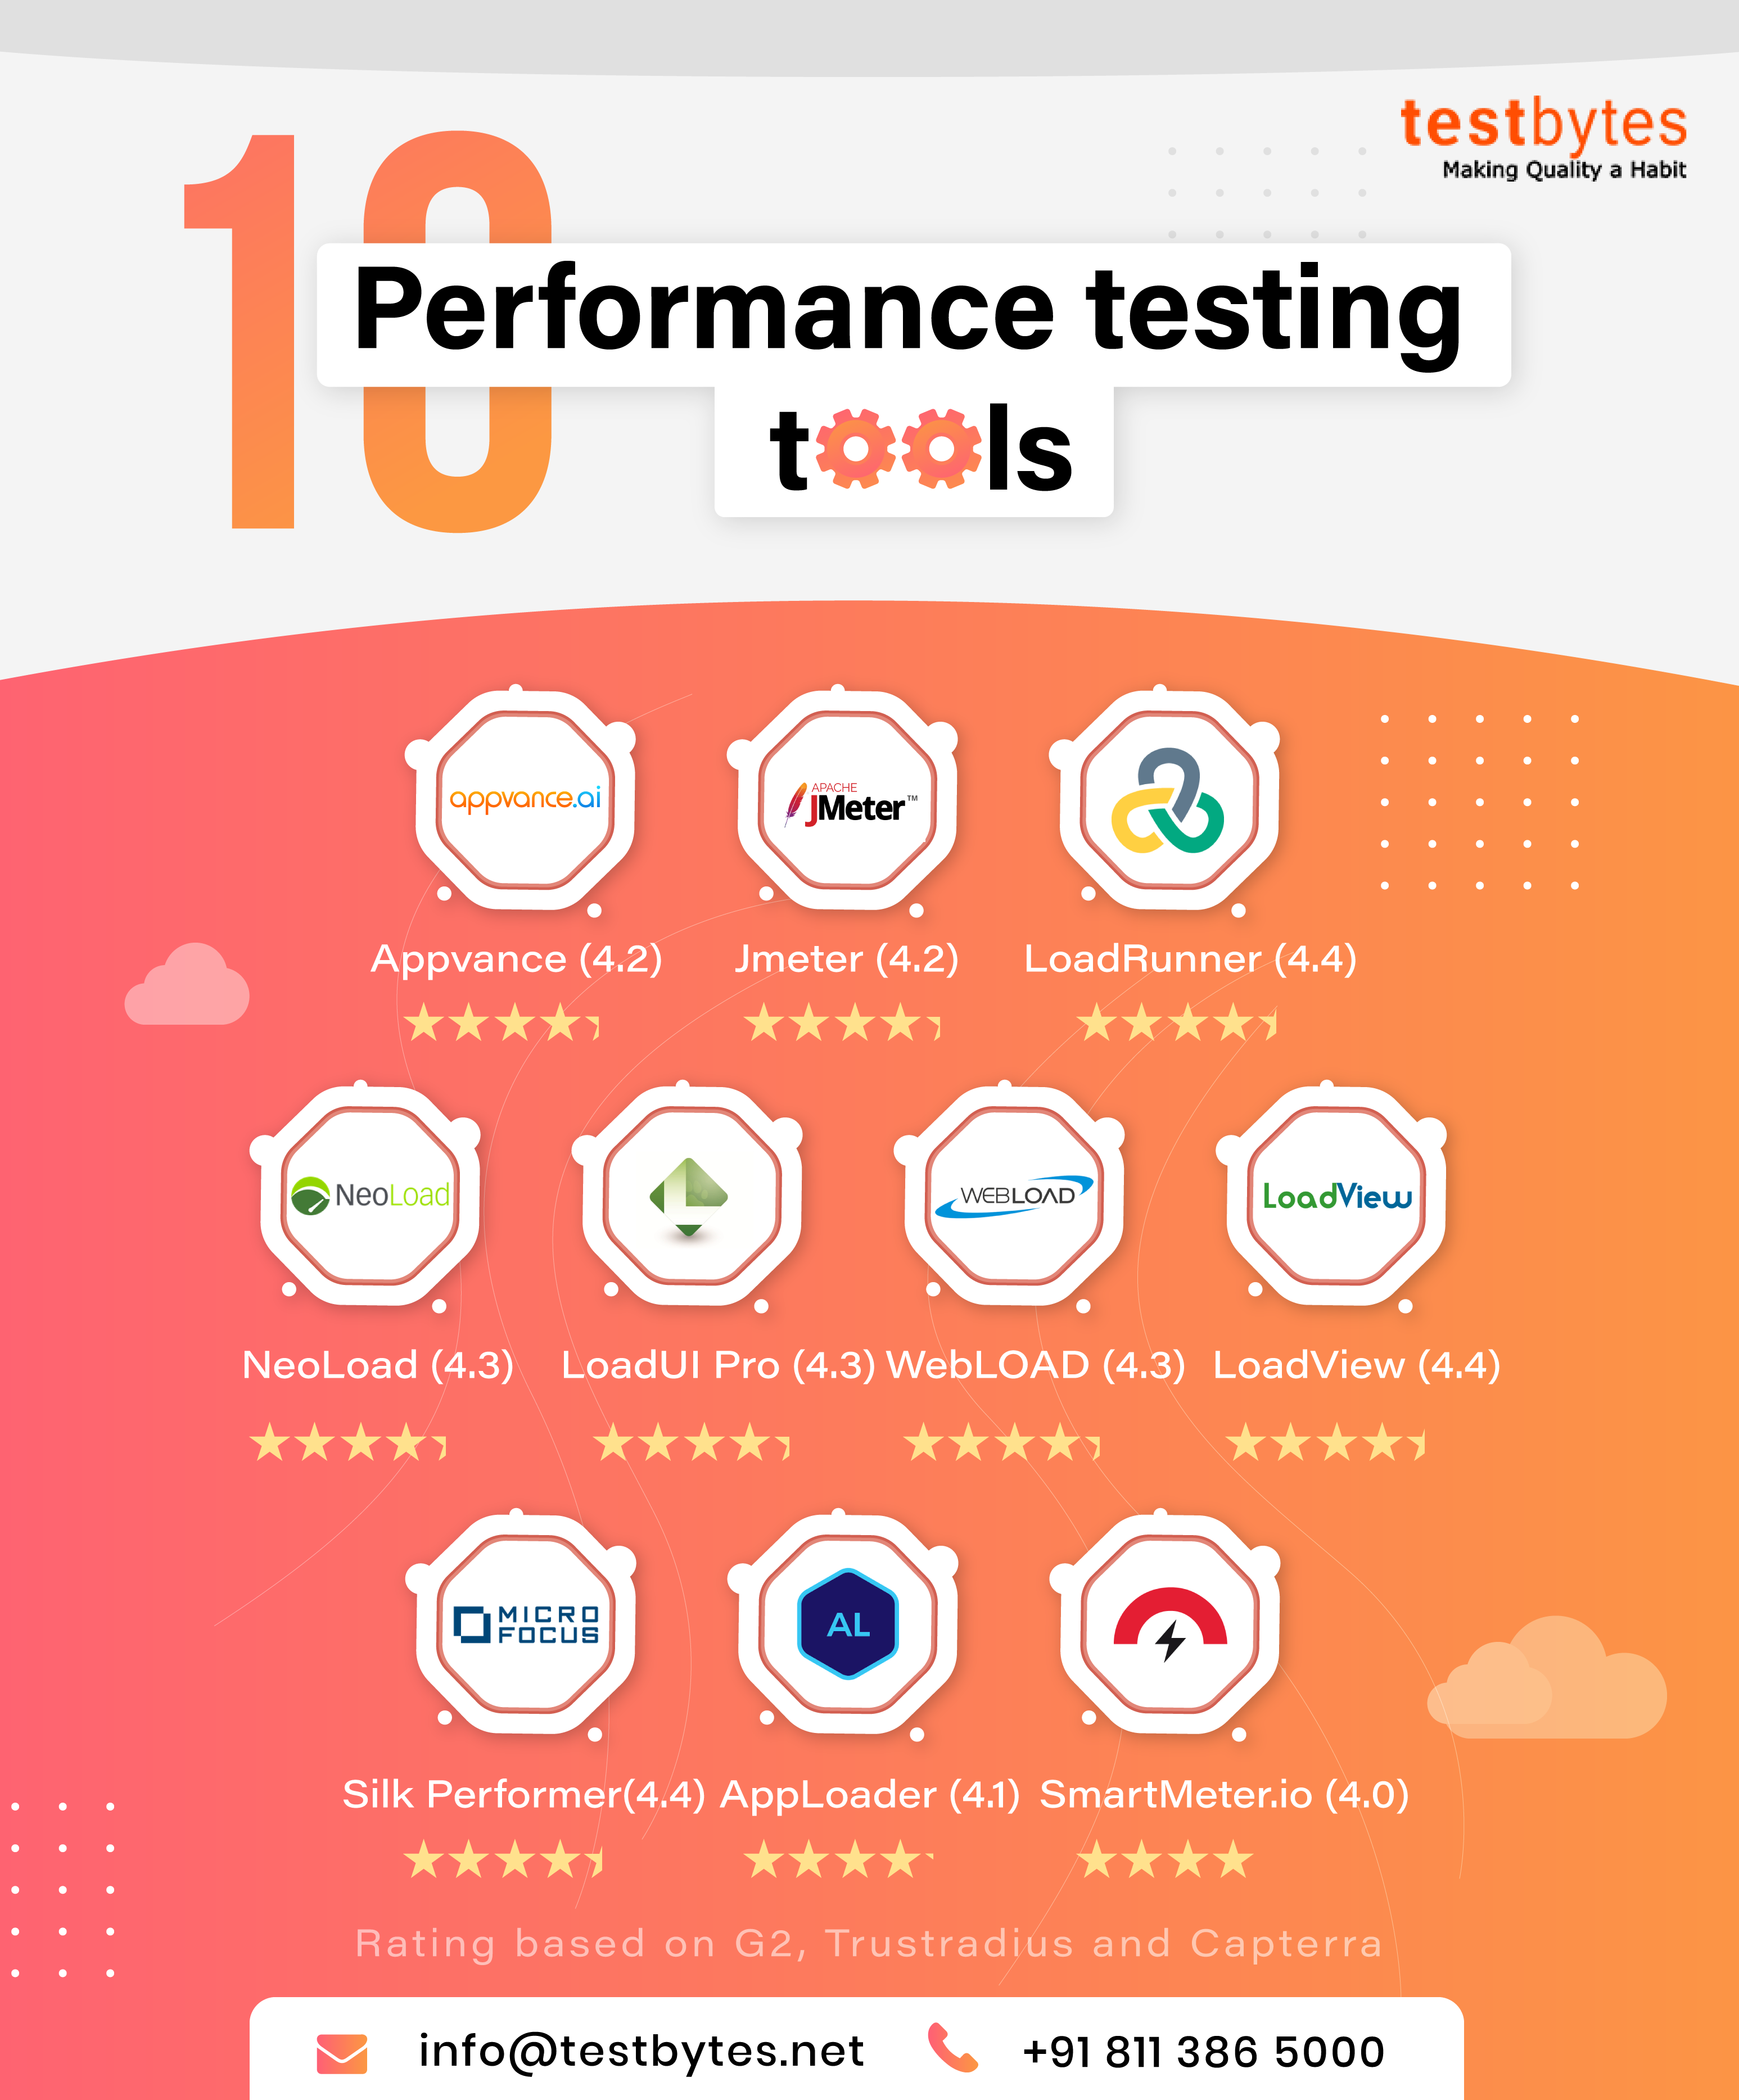 10-Performance-testing-tools